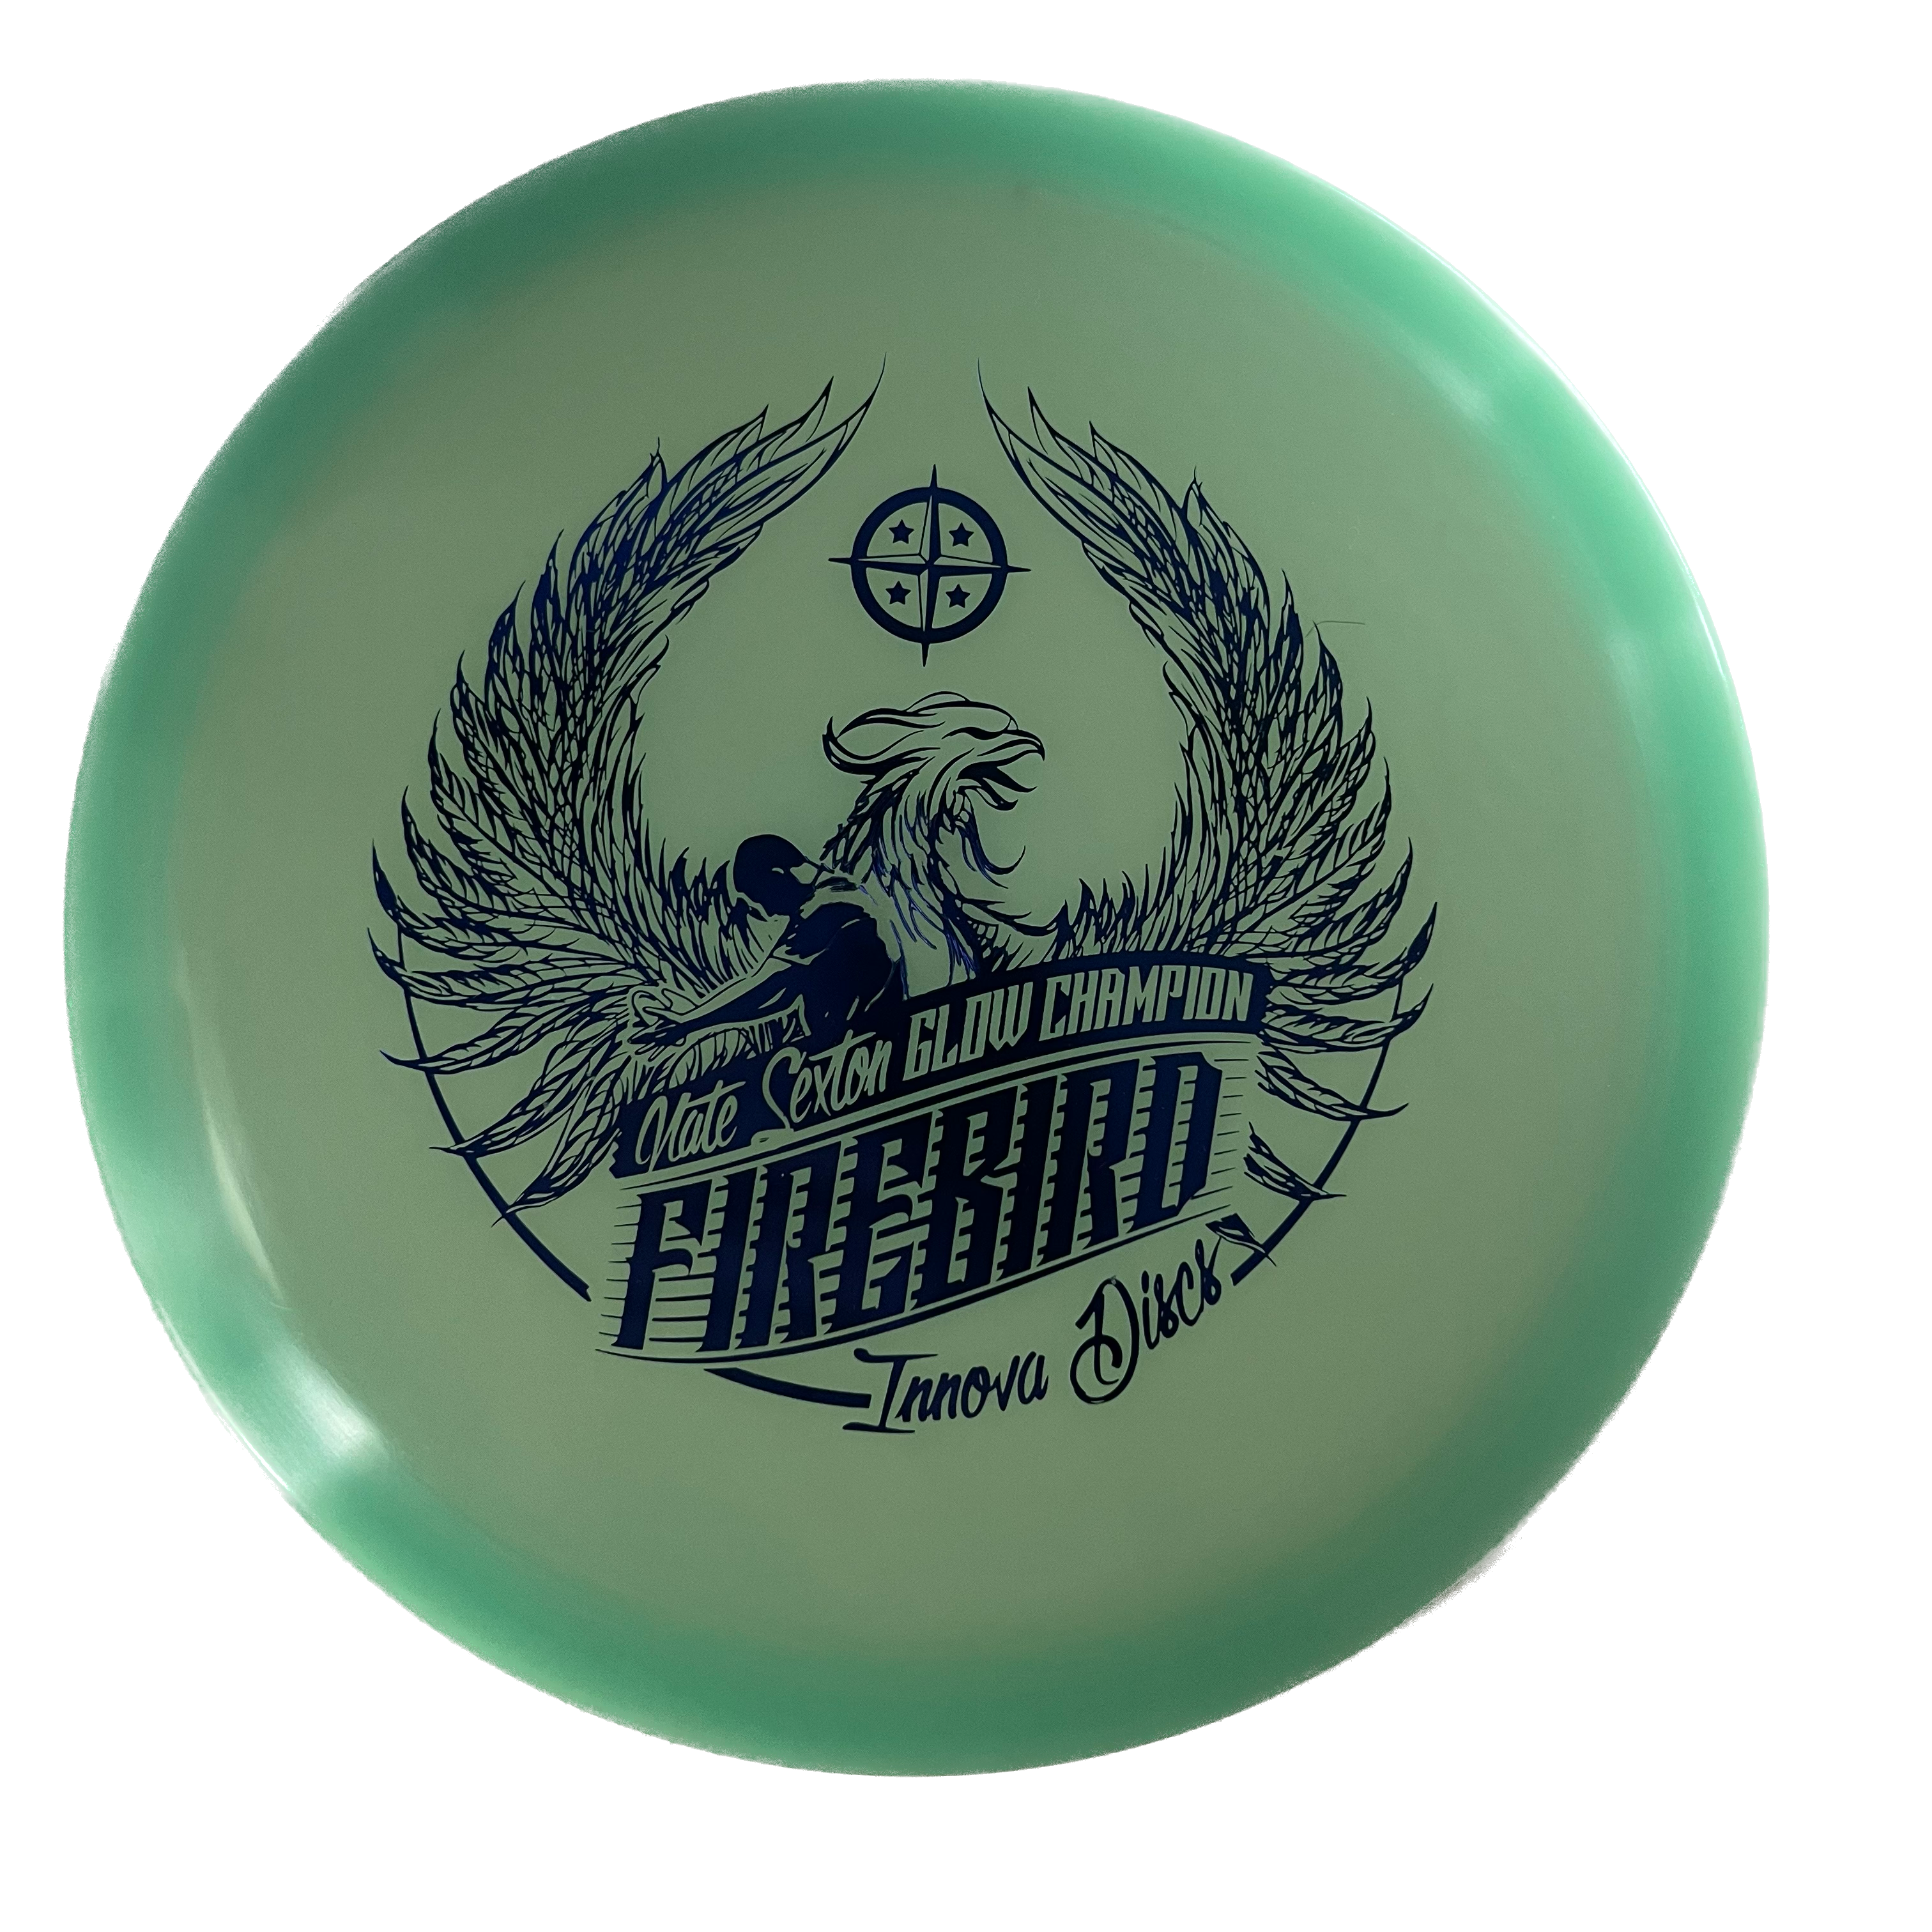 Innova Color Glow Champion Firebird - Nate Sexton 2016